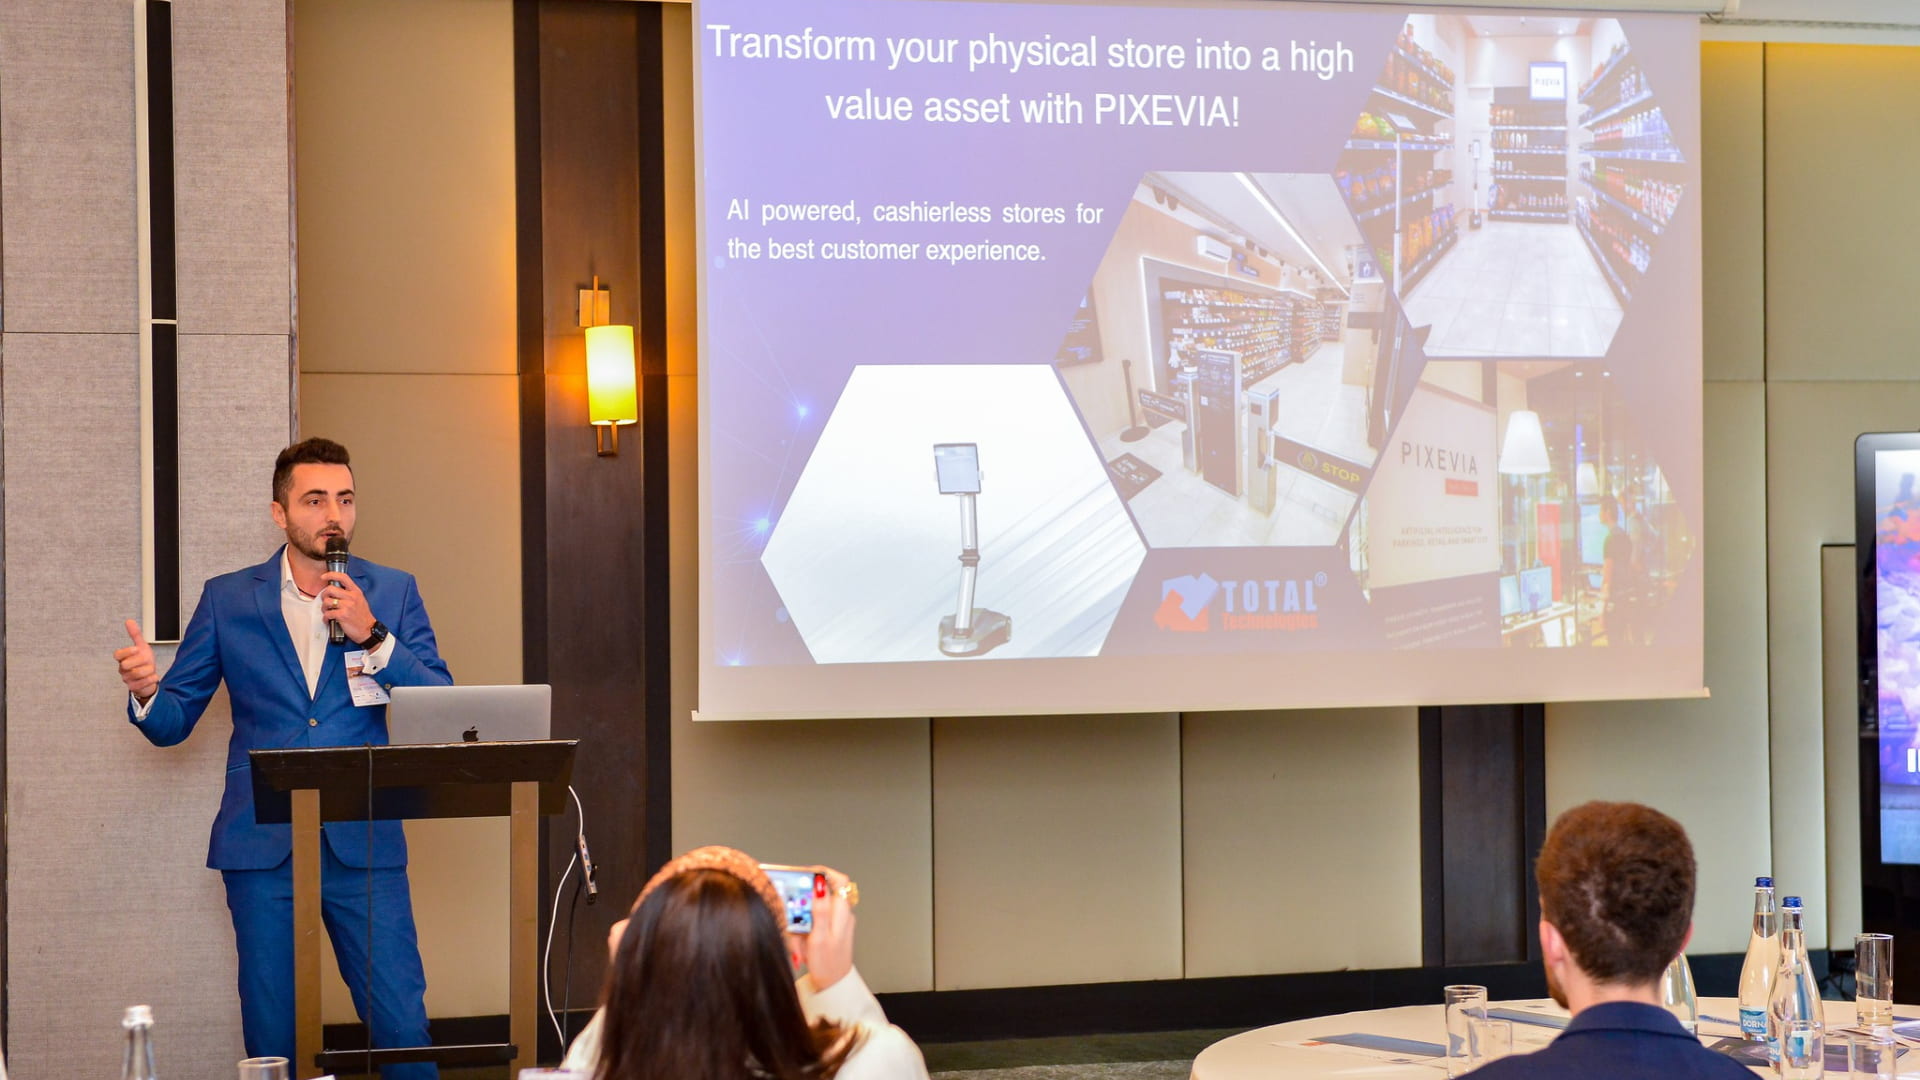 Total Technologies a prezentat soluția Pixevia la conferința “Retail Tech”